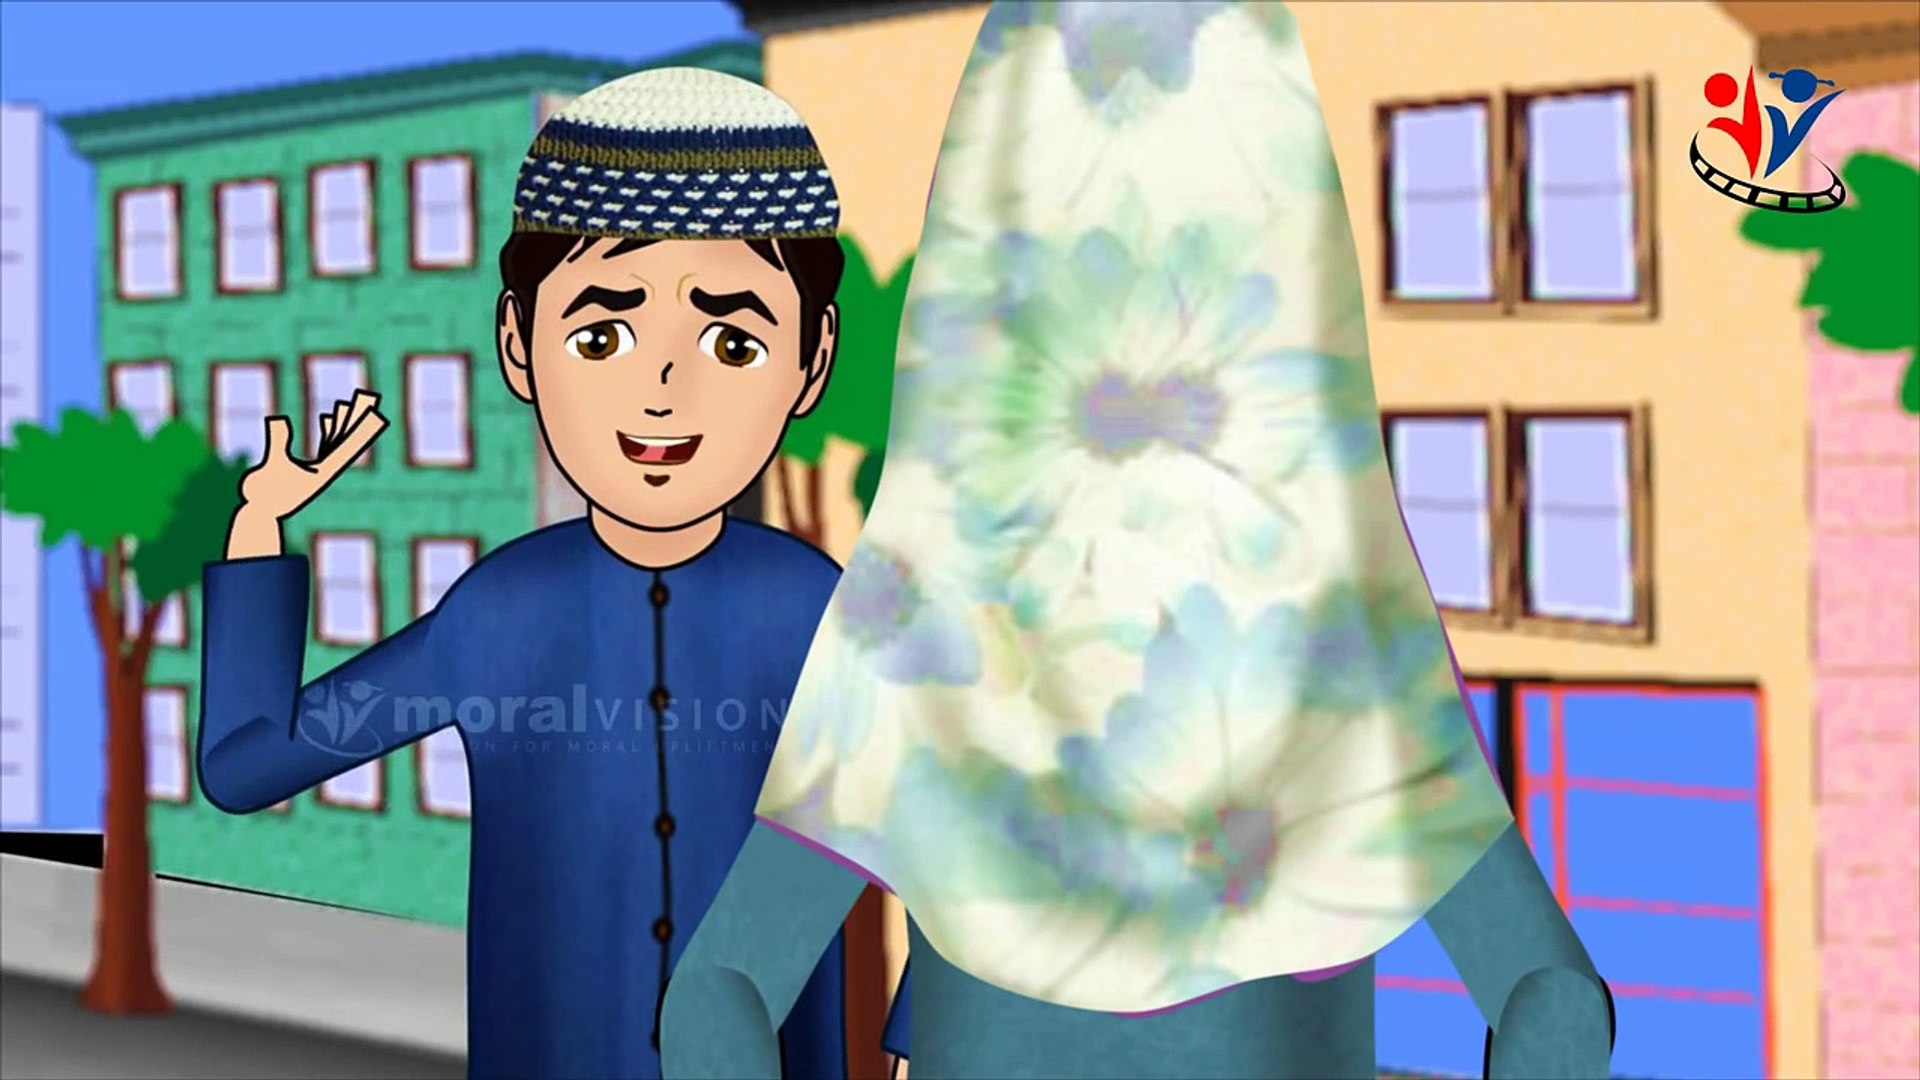 Spitting Etiquette - Cleanliness islamic cartoons for Children - Abdul Bari  Etiquette_2 - video Dailymotion